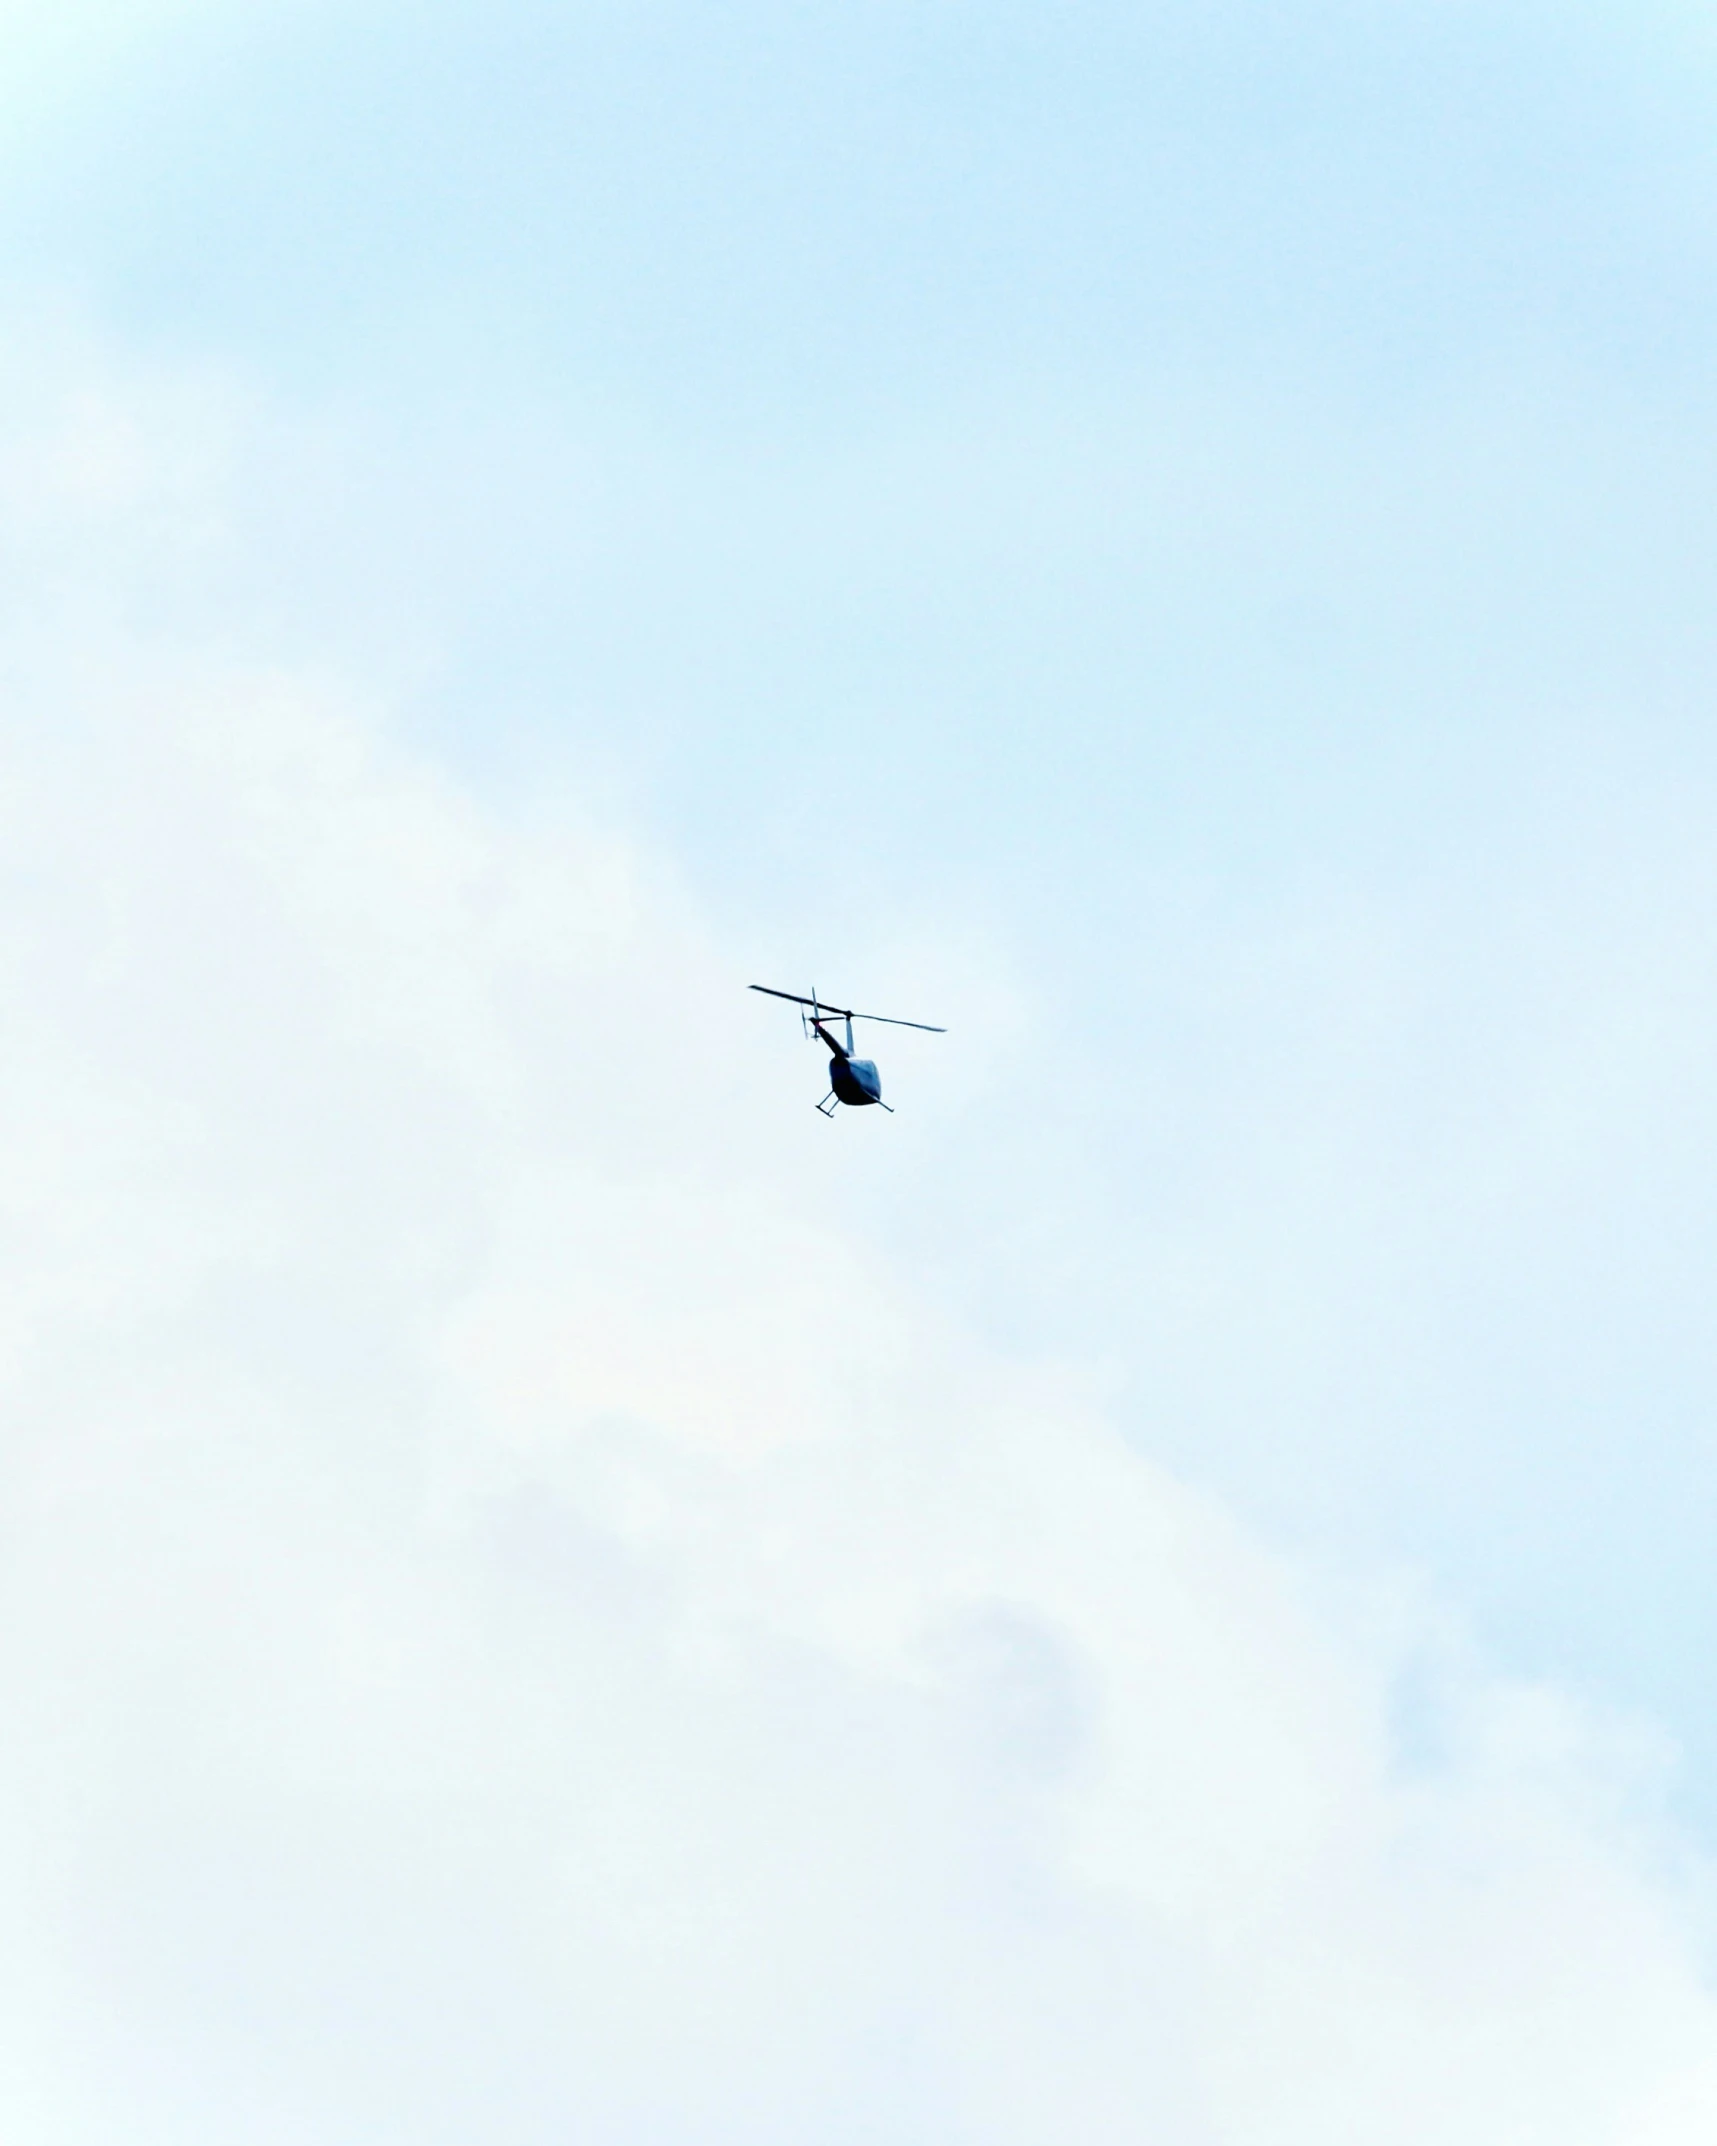 an air plane flying on a cloudy blue sky